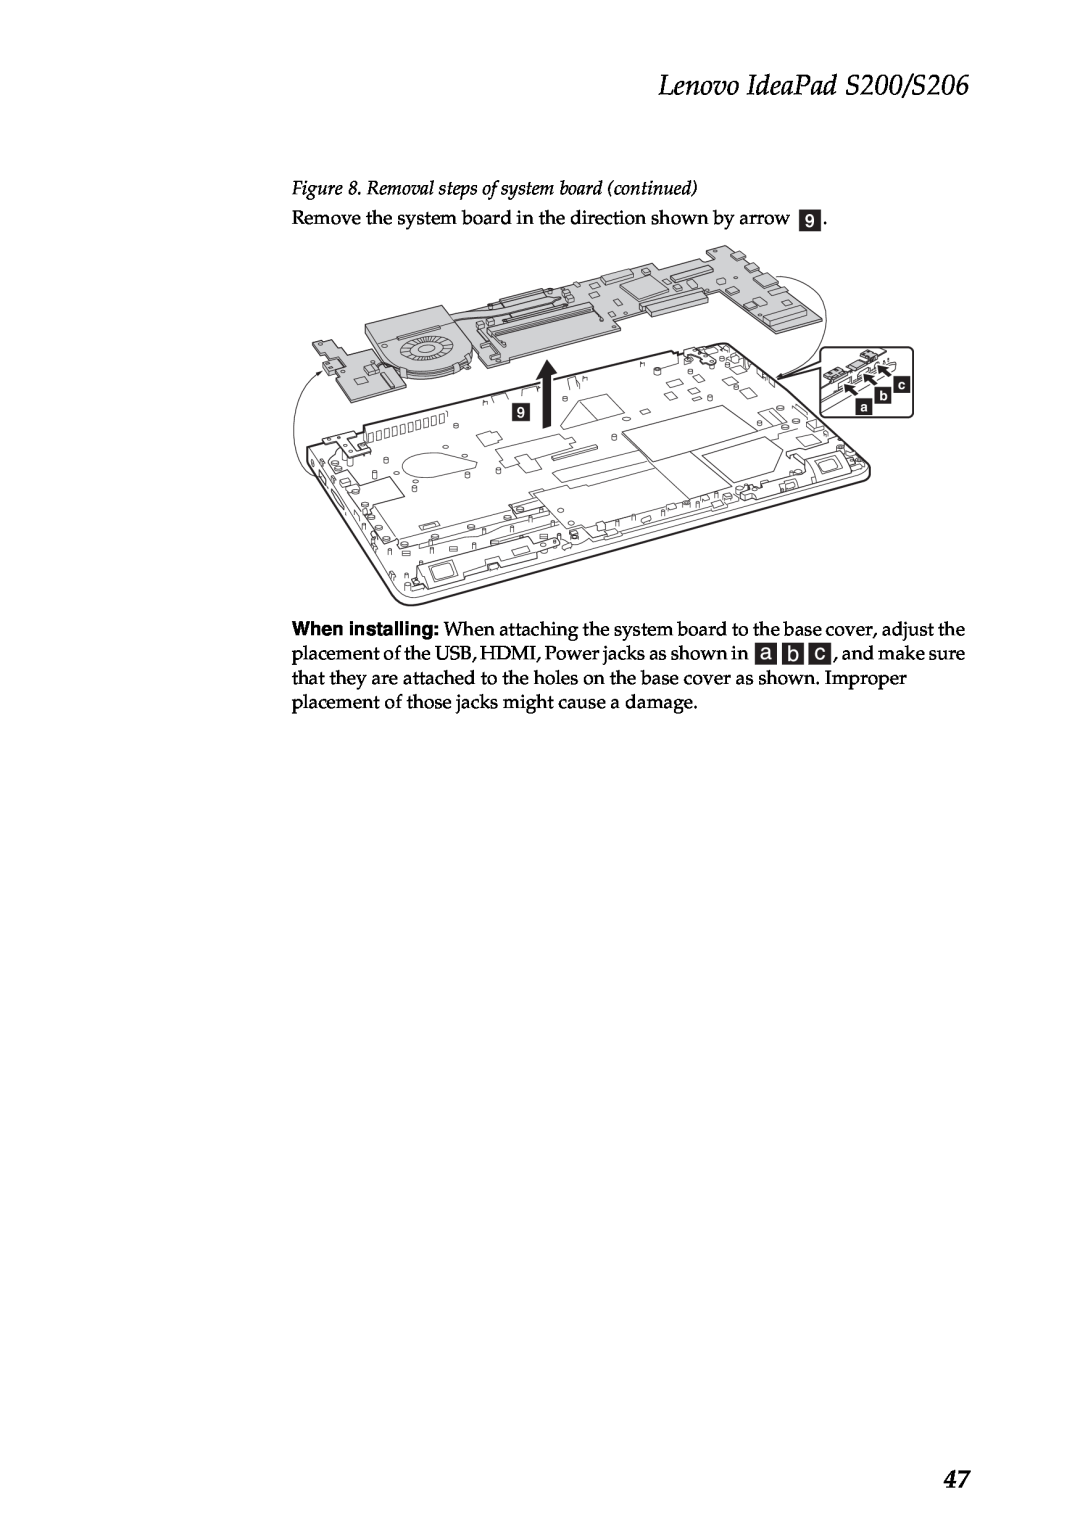 Lenovo manual Removal steps of system board continued, Lenovo IdeaPad S200/S206 